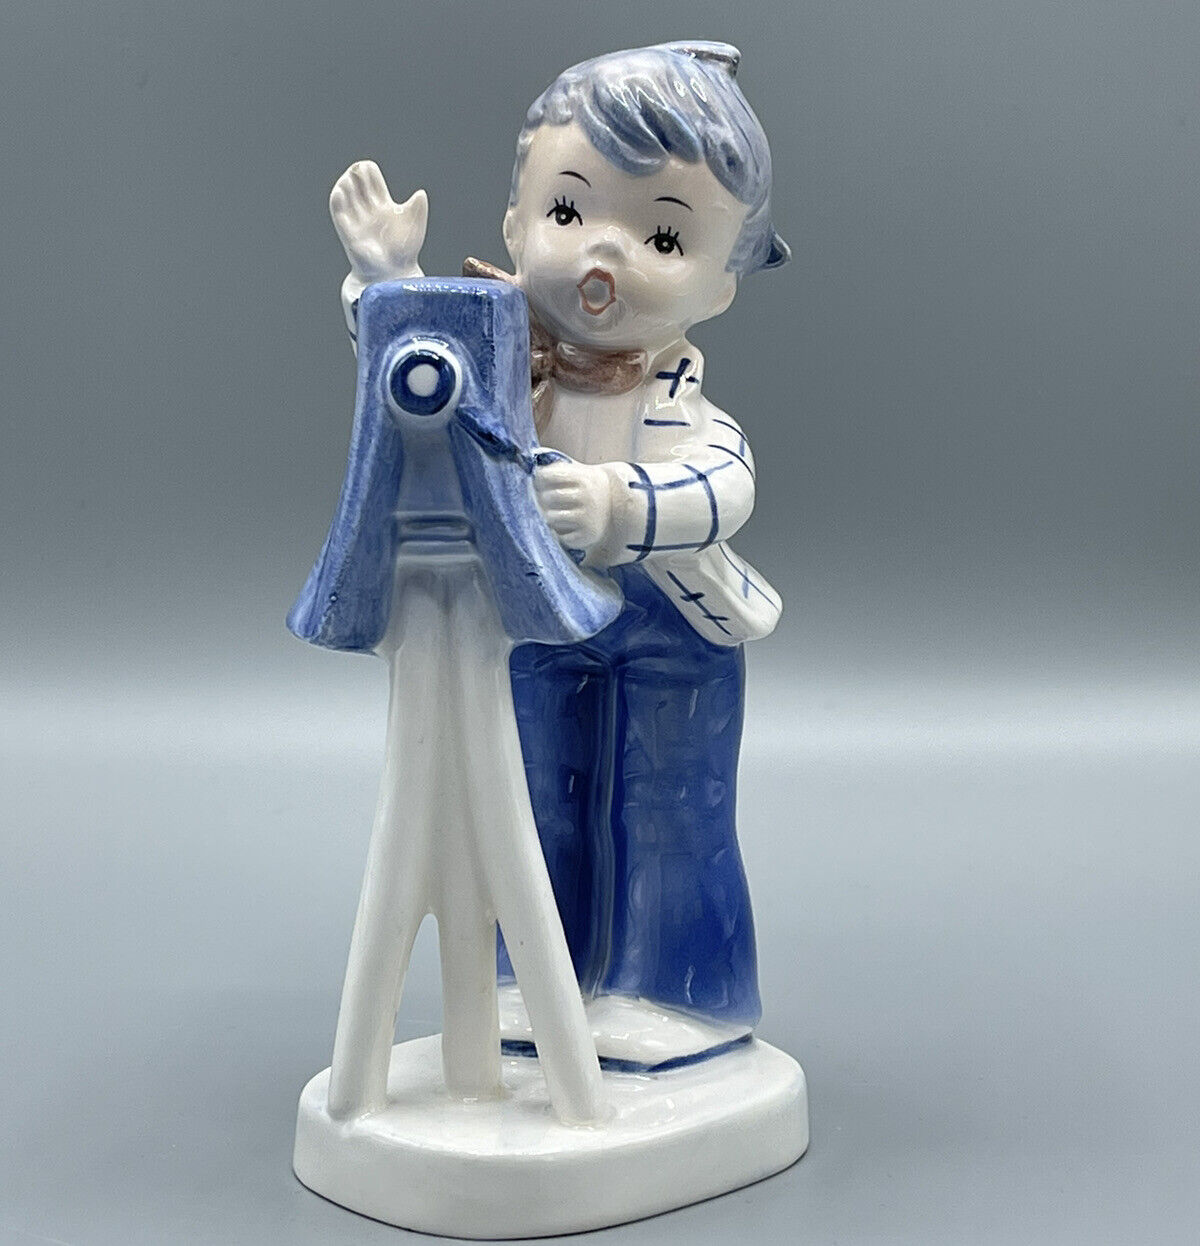 Vintage Napco Cameraman Camera Man Boy figurine blue & white ceramic A3117 Japan